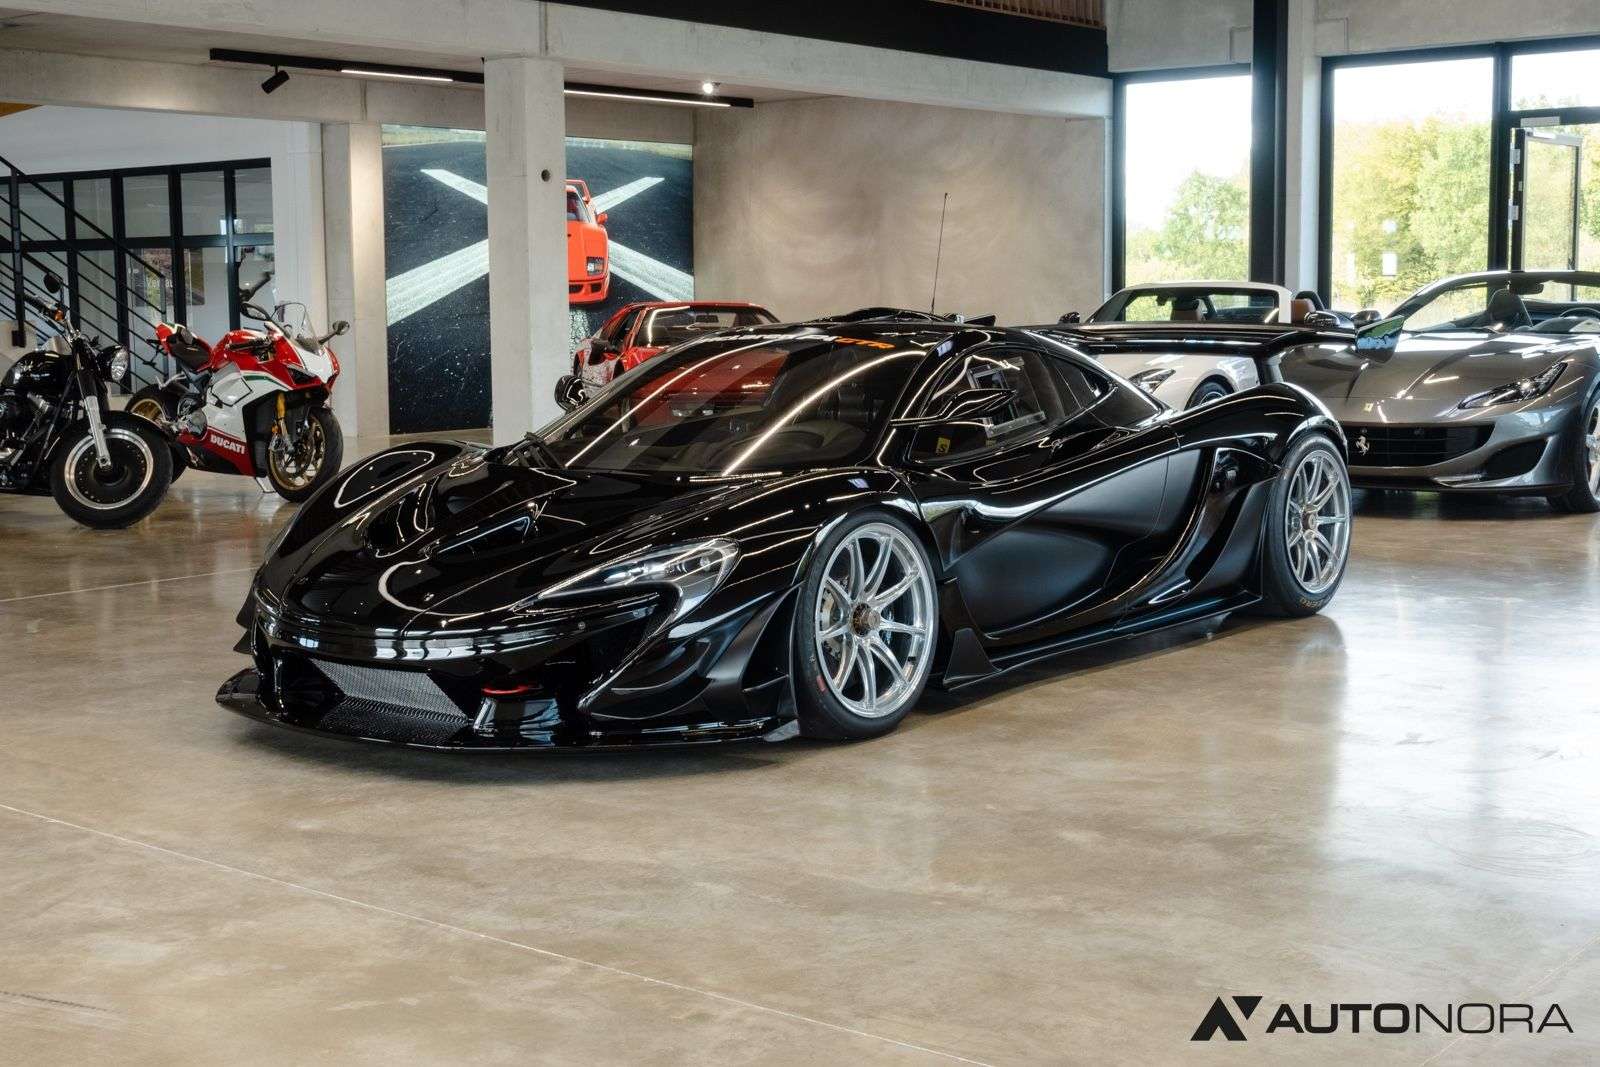 McLaren P1 Coupe in Black used in Bitburg for € 2,899,900.-